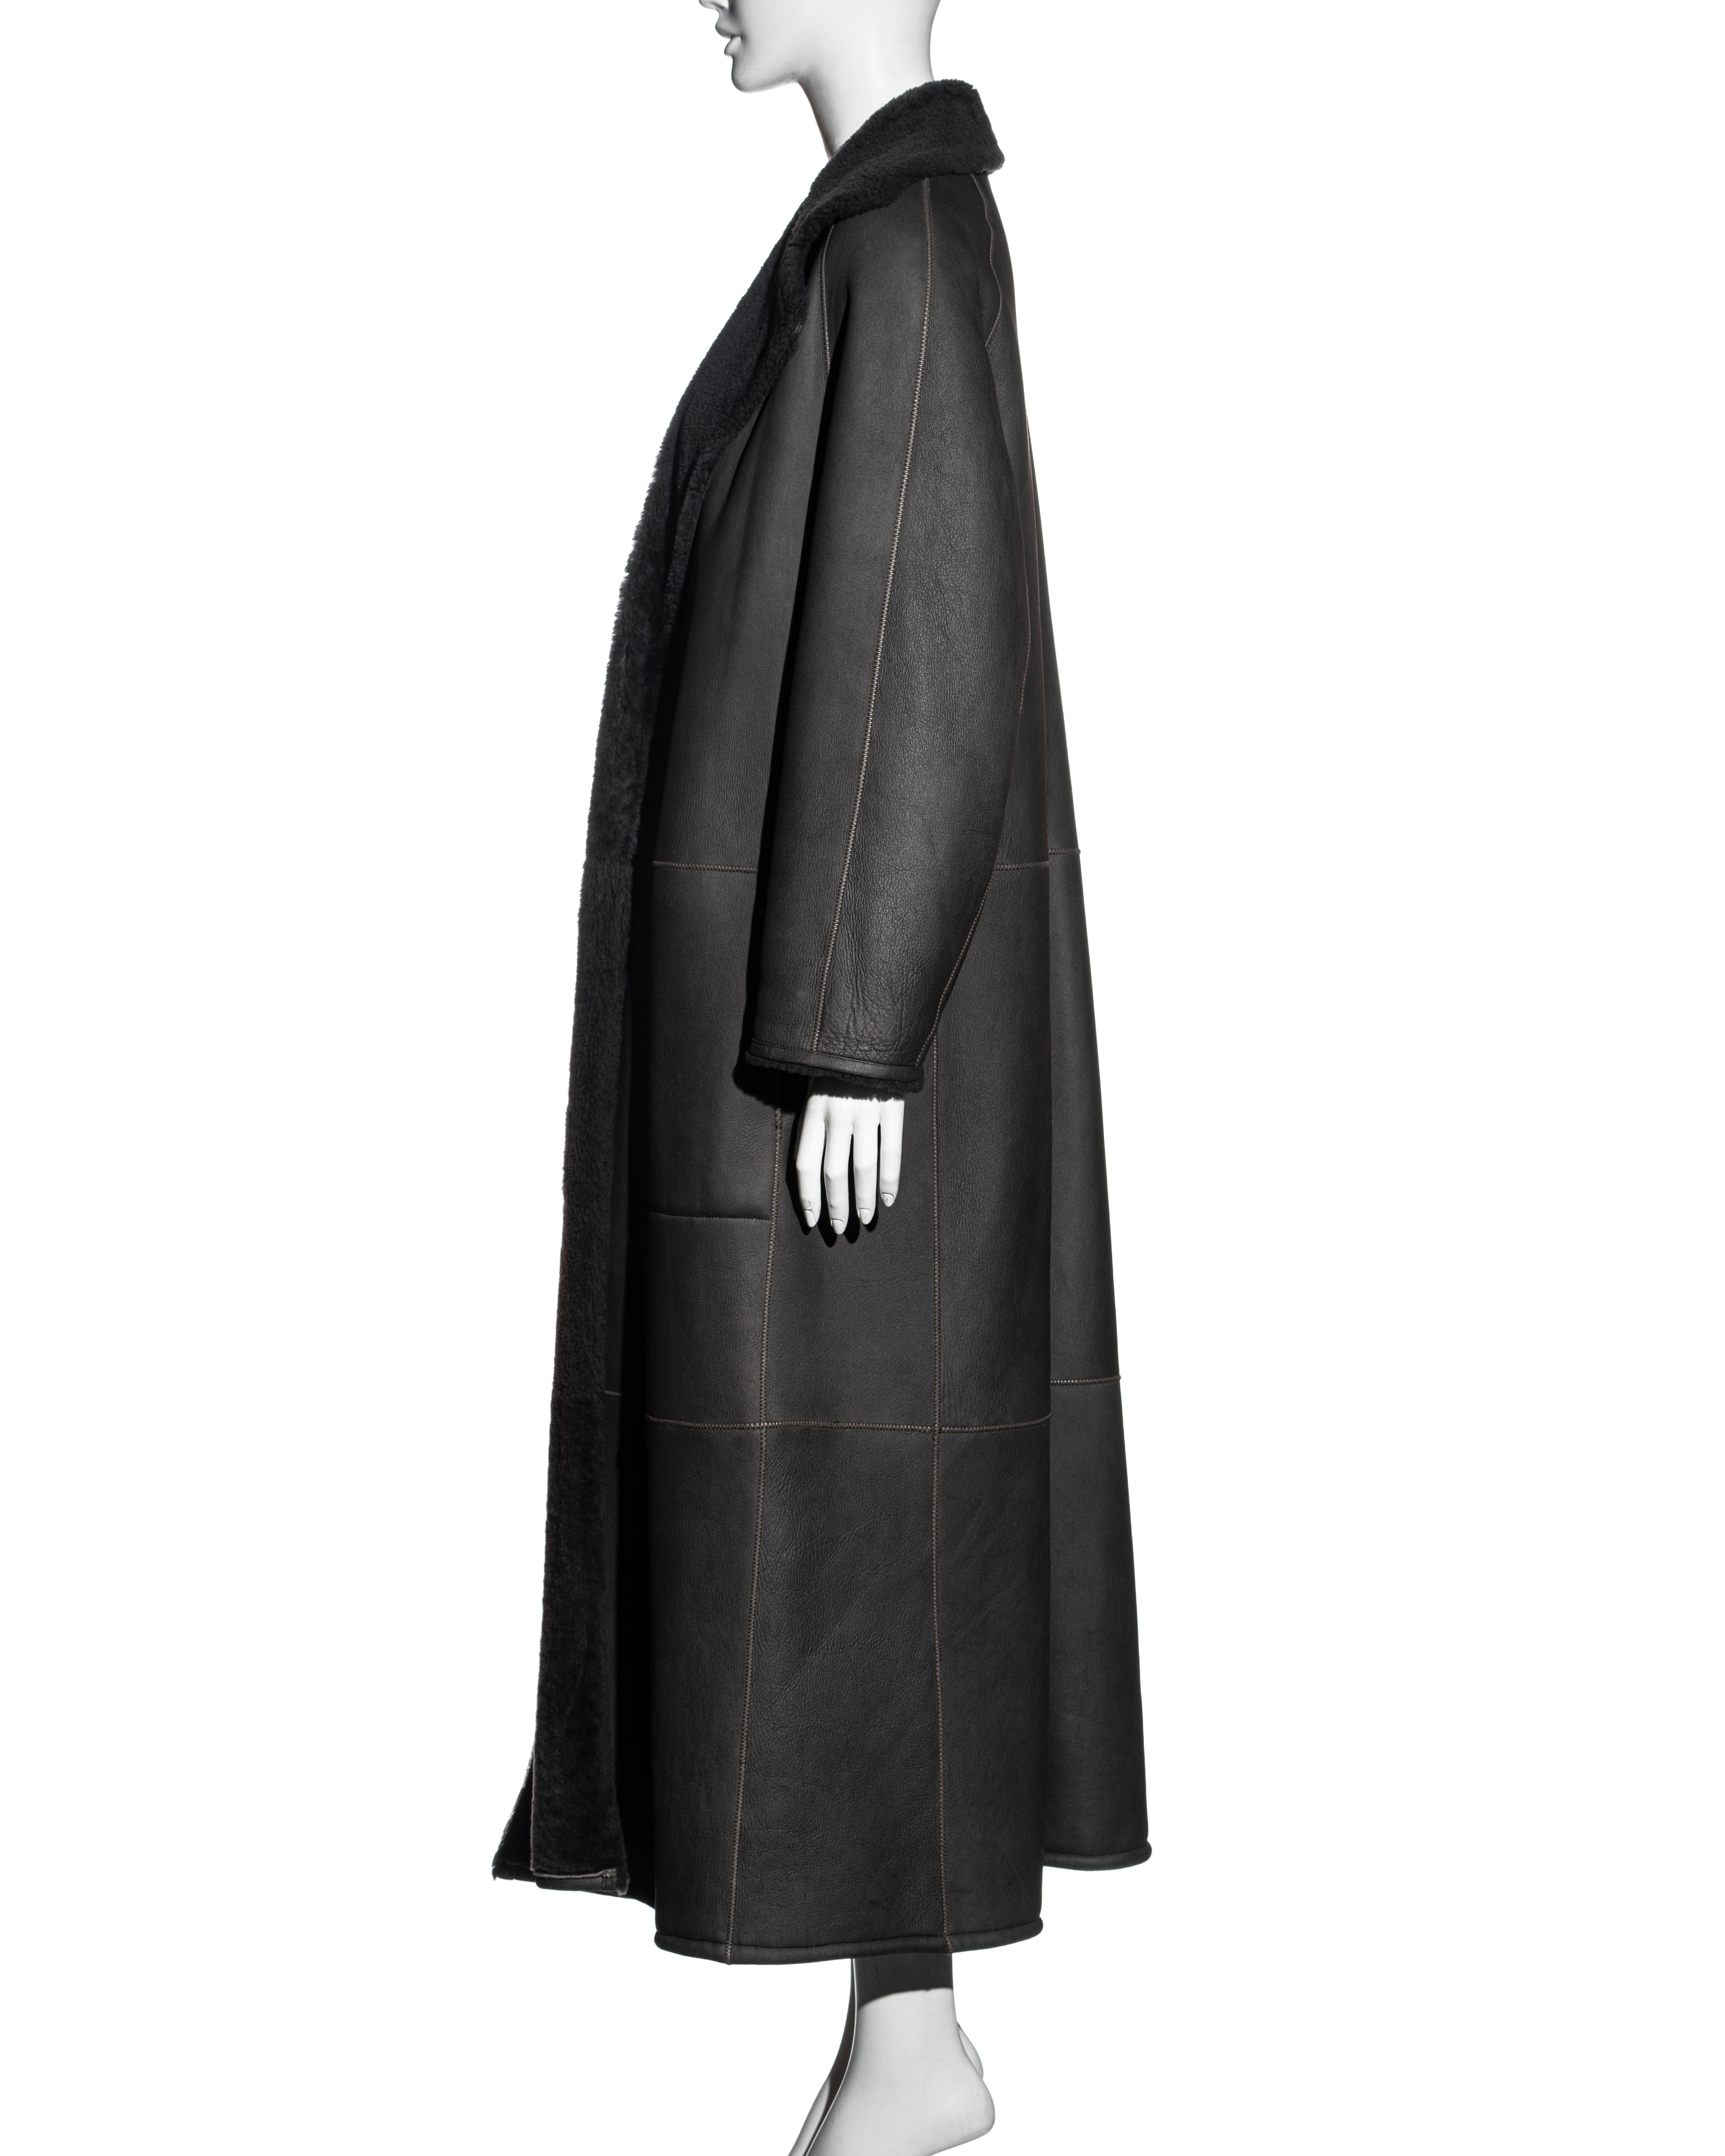 Hermes by Martin Margiela reversible grey shearling maxi coat, fw 1999 1